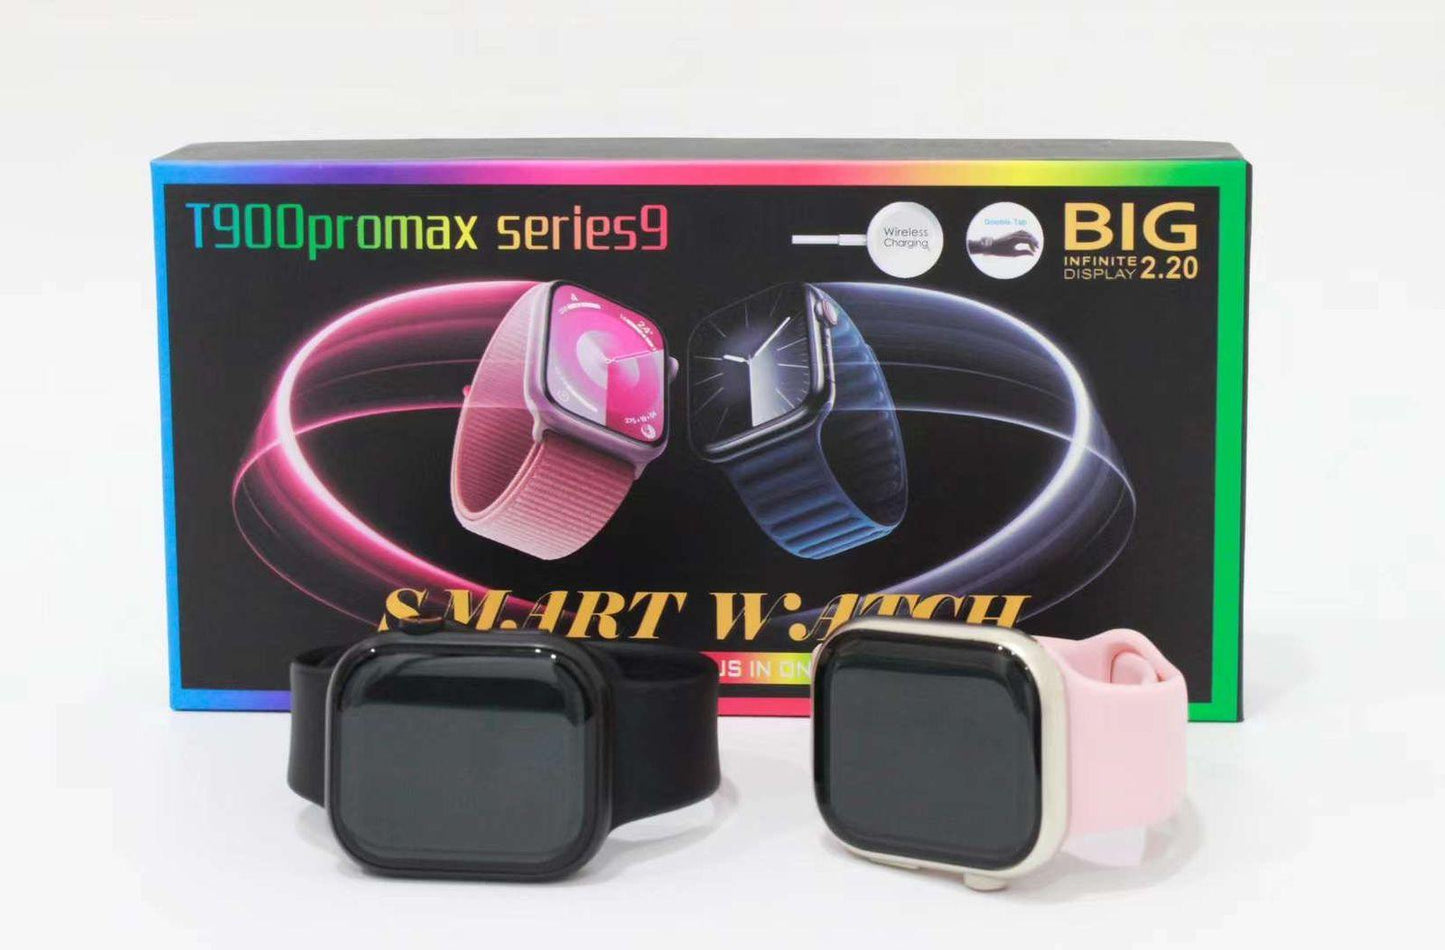 T900 pro max series 9 smartwatch - HT Bazar